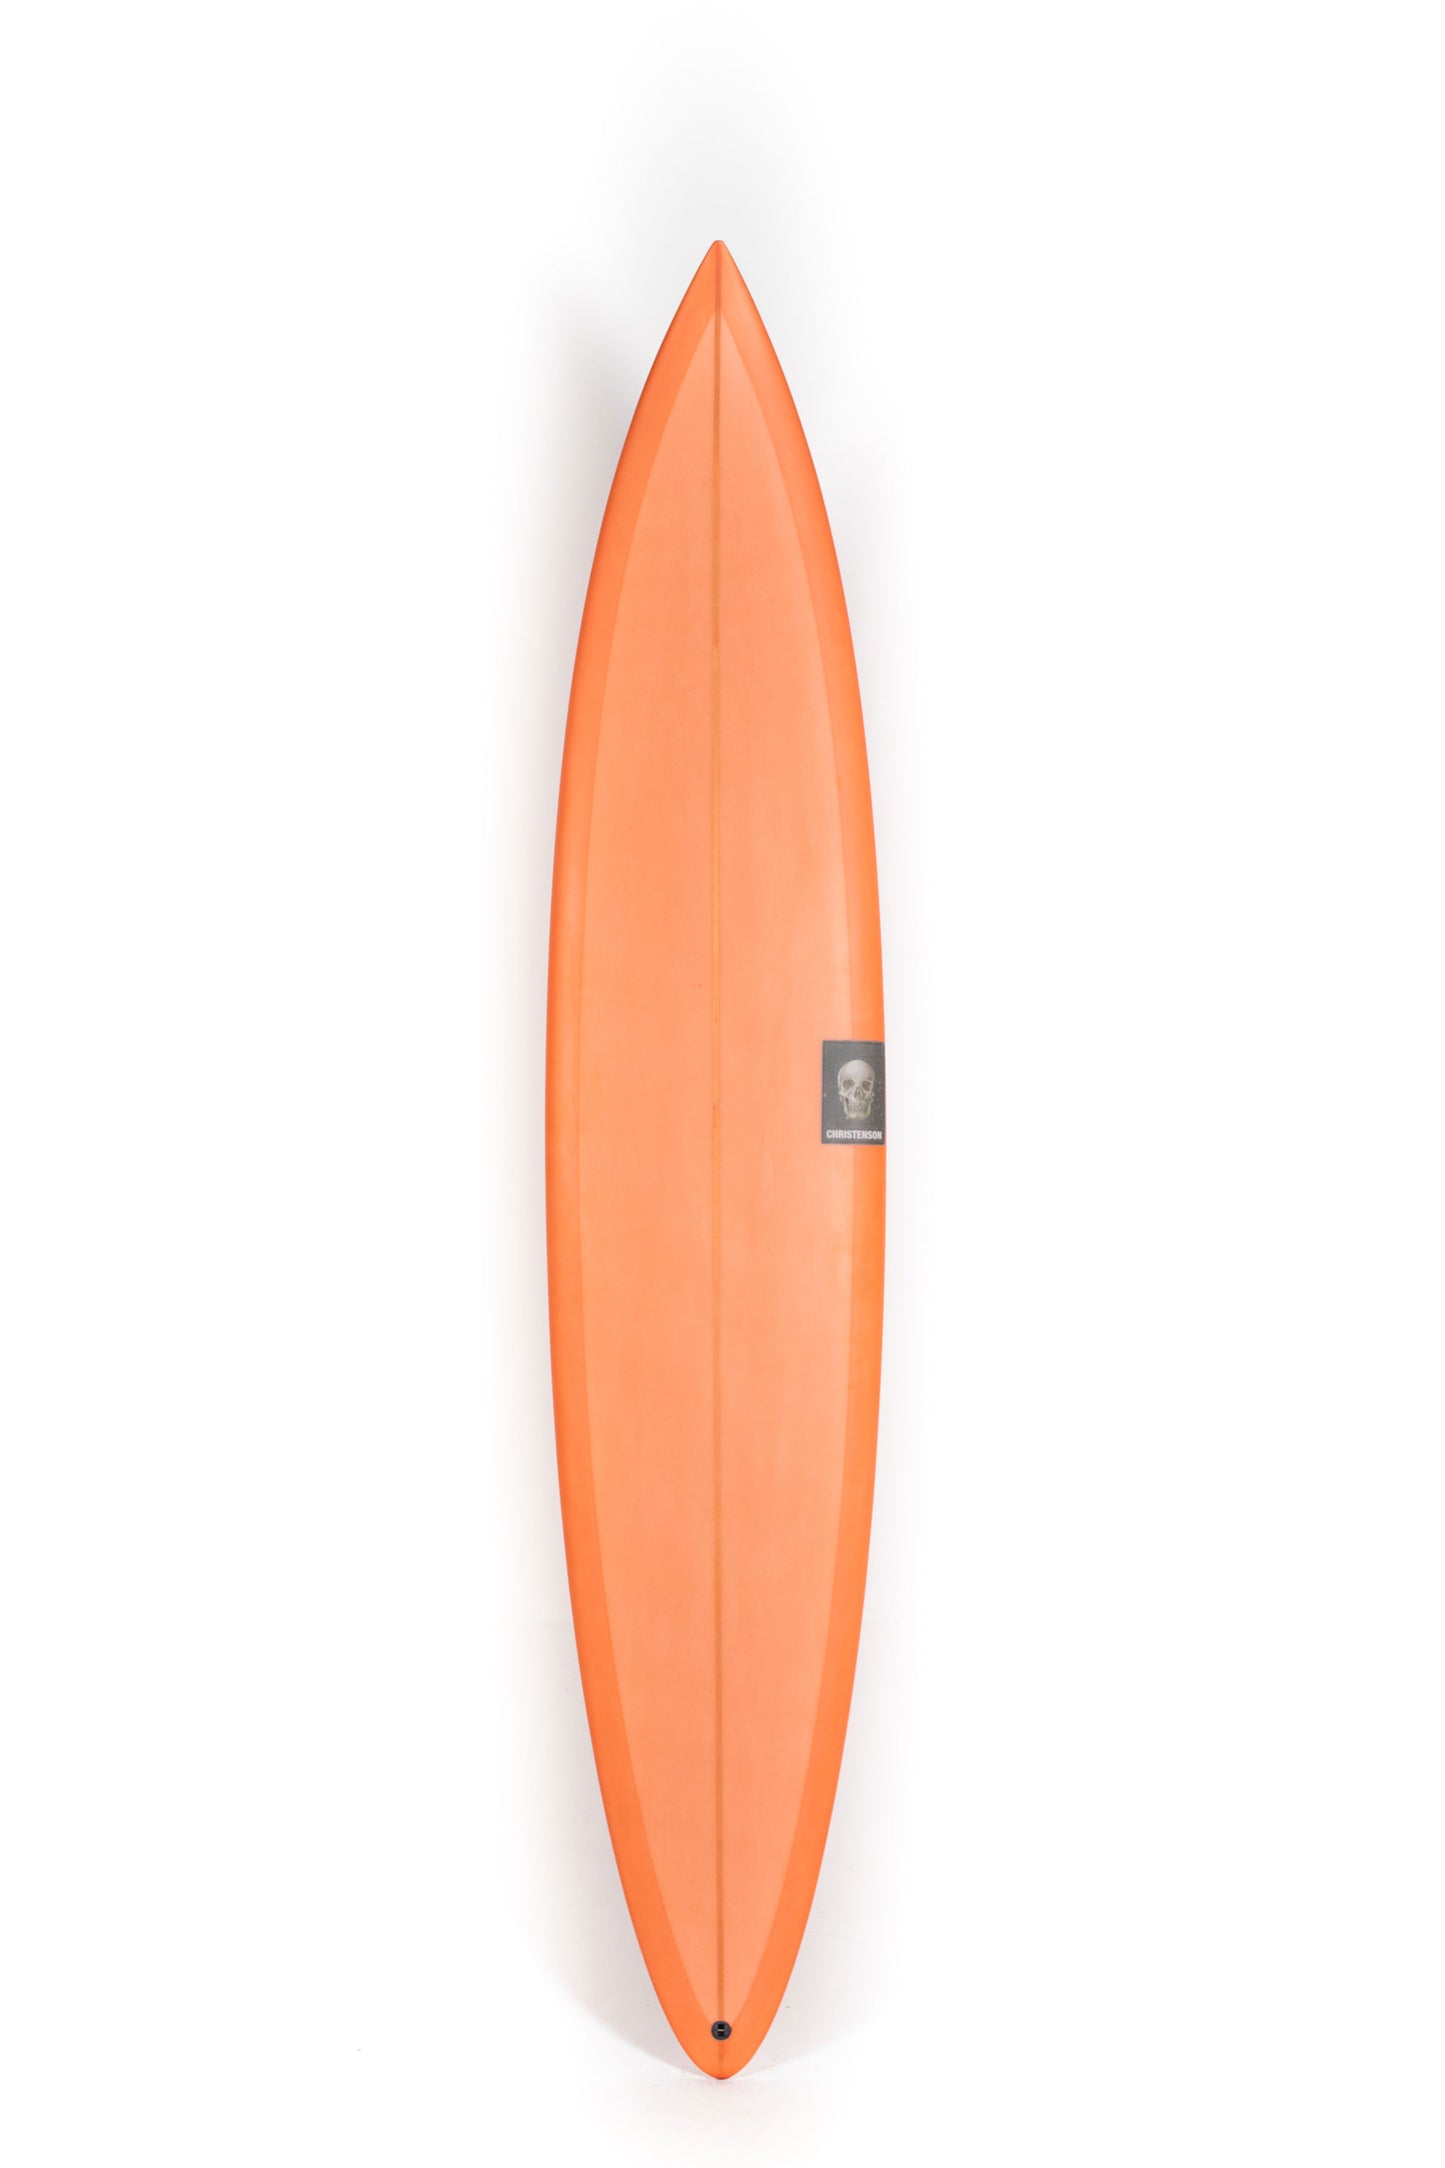 Pukas-Surf-Shop-Christenson-Surfboards-Carrera-Chris-Christenson-8_6